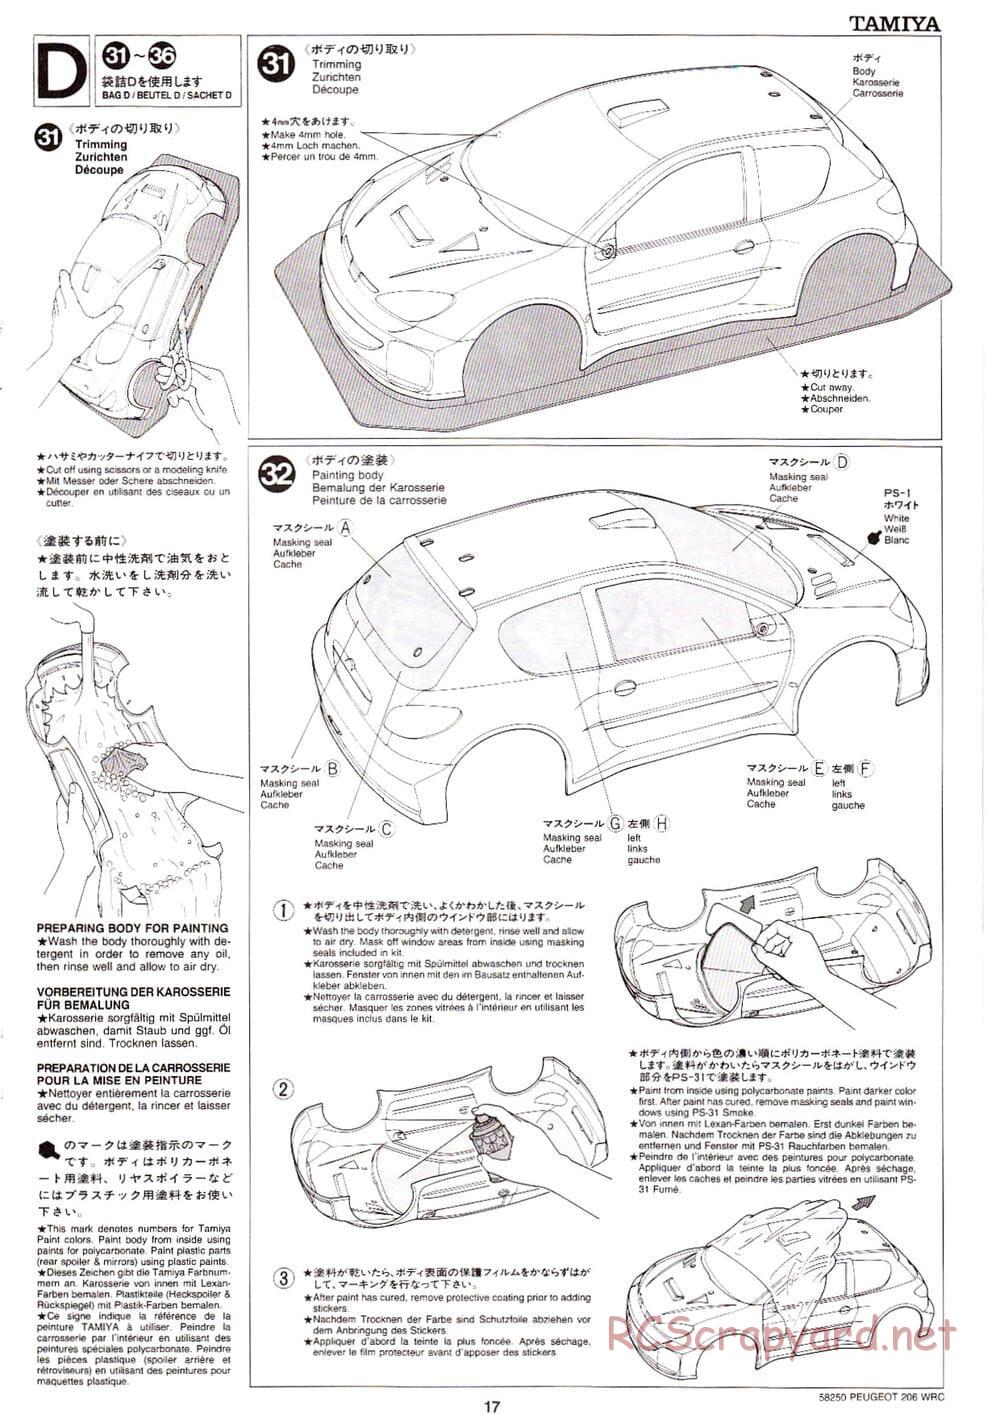 Tamiya - Peugeot 206 WRC - TA-03FS Chassis - Manual - Page 17